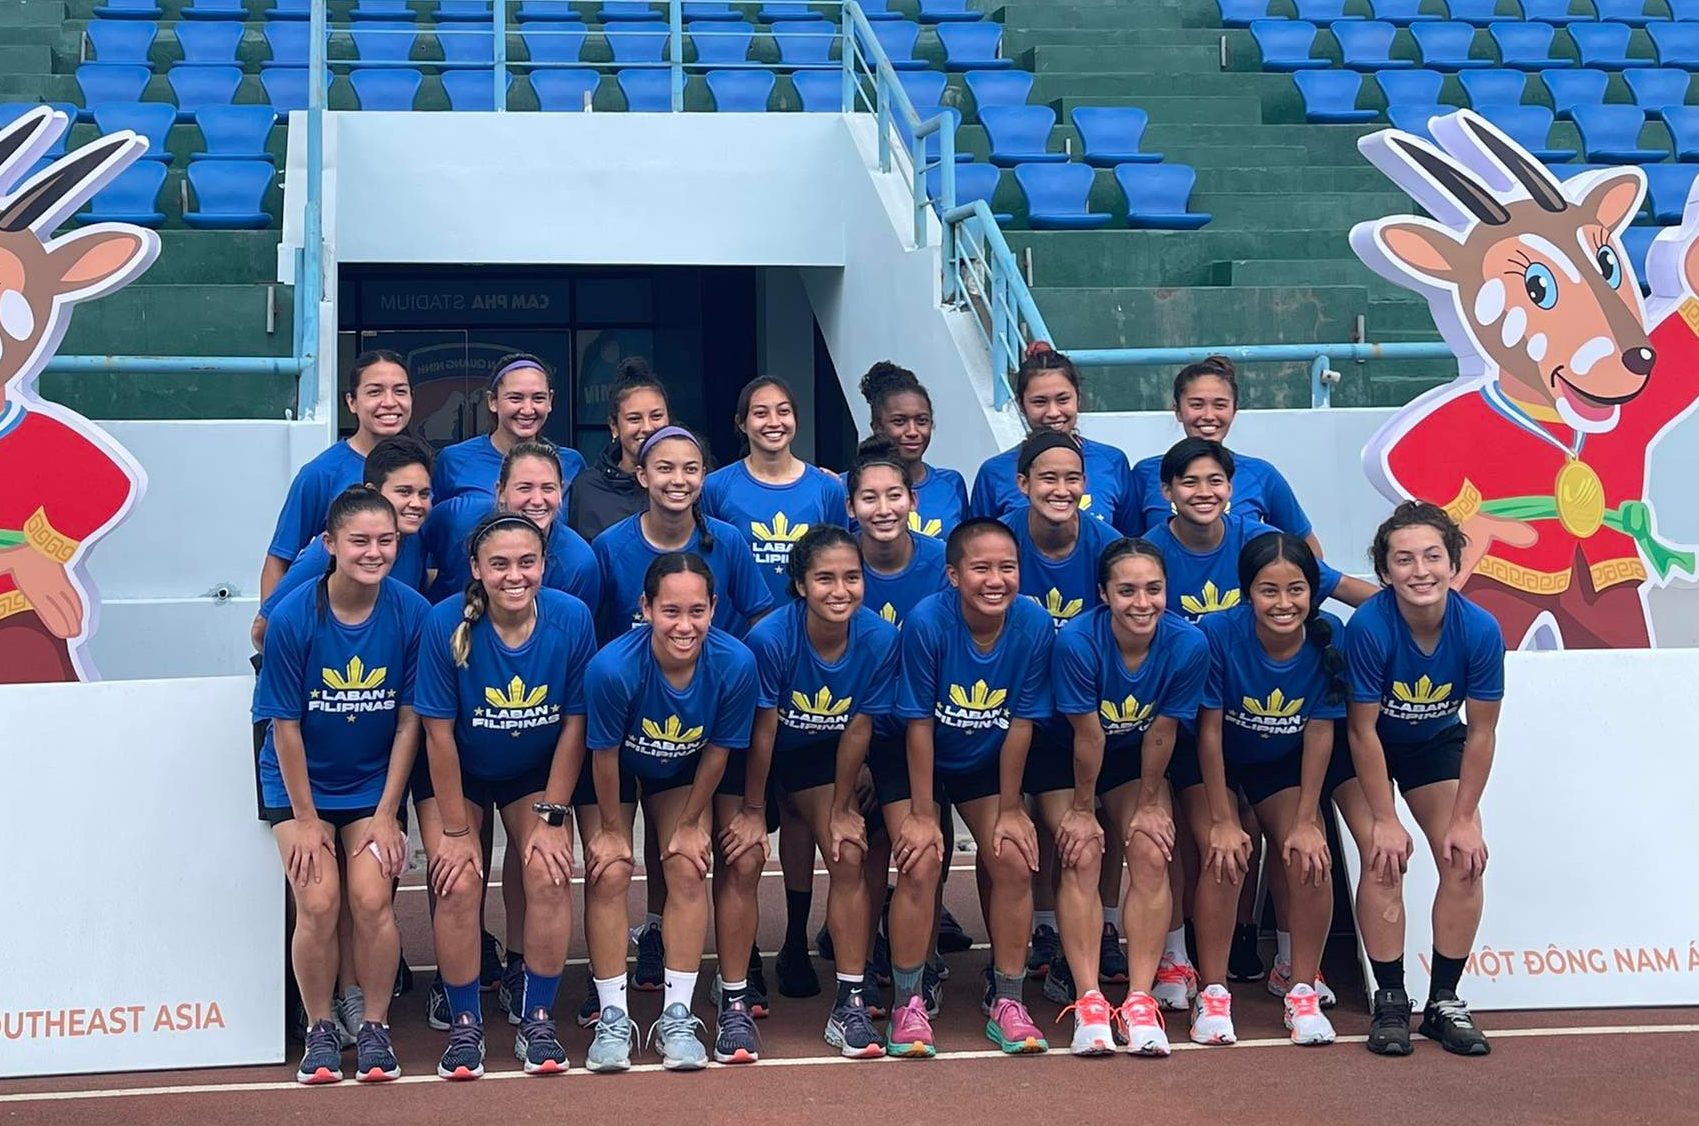 Philippines women's soccer team